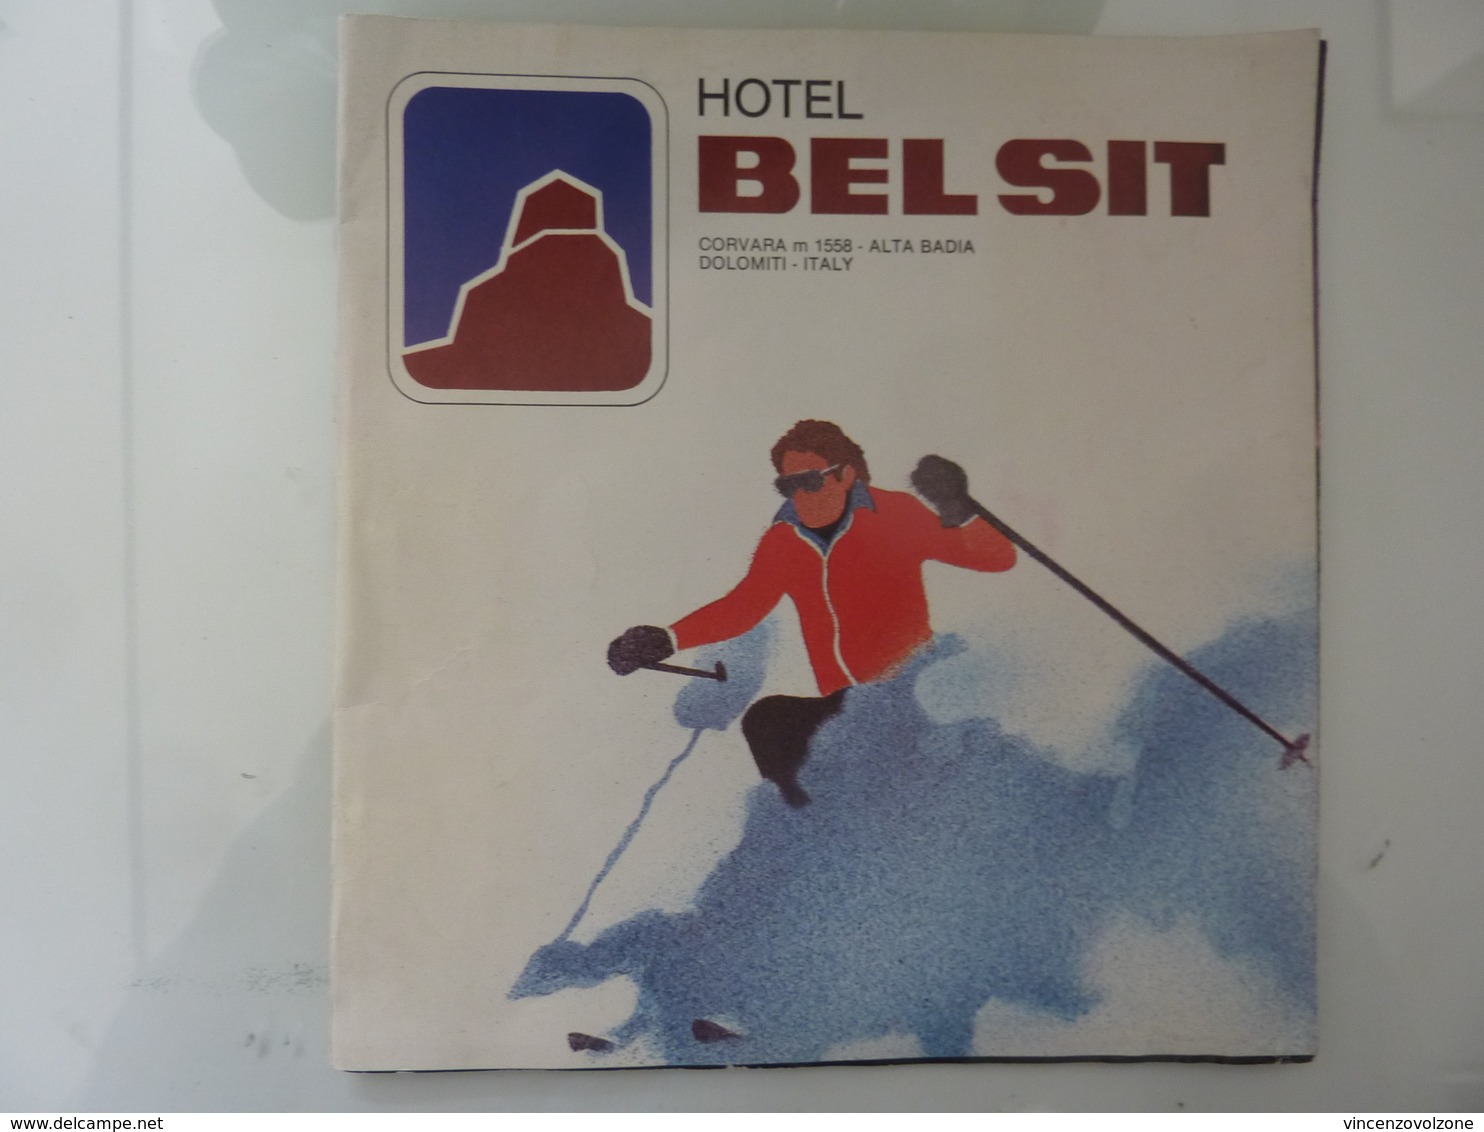 Pieghevole Illustrato "HOTEL BELSIT CORVARA - ALTA BADIA" - Dépliants Turistici